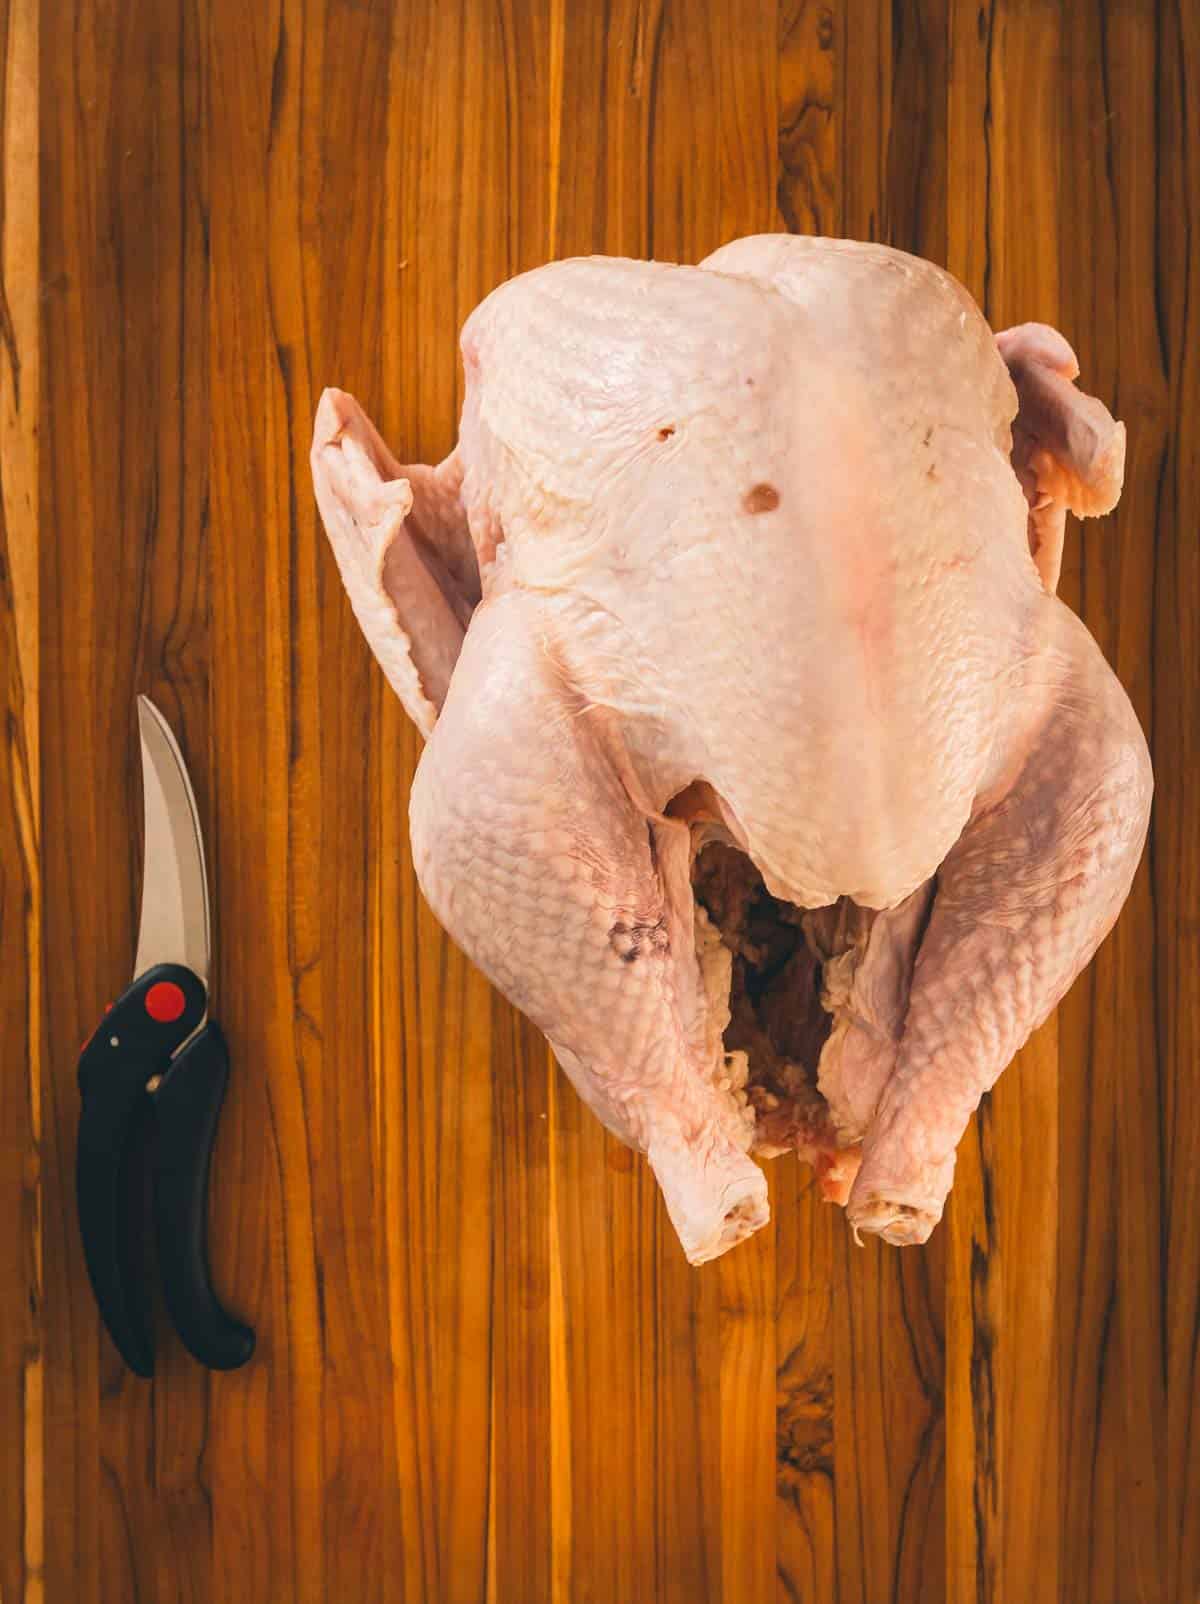 Raw turkey on a cutting board with sheers. 